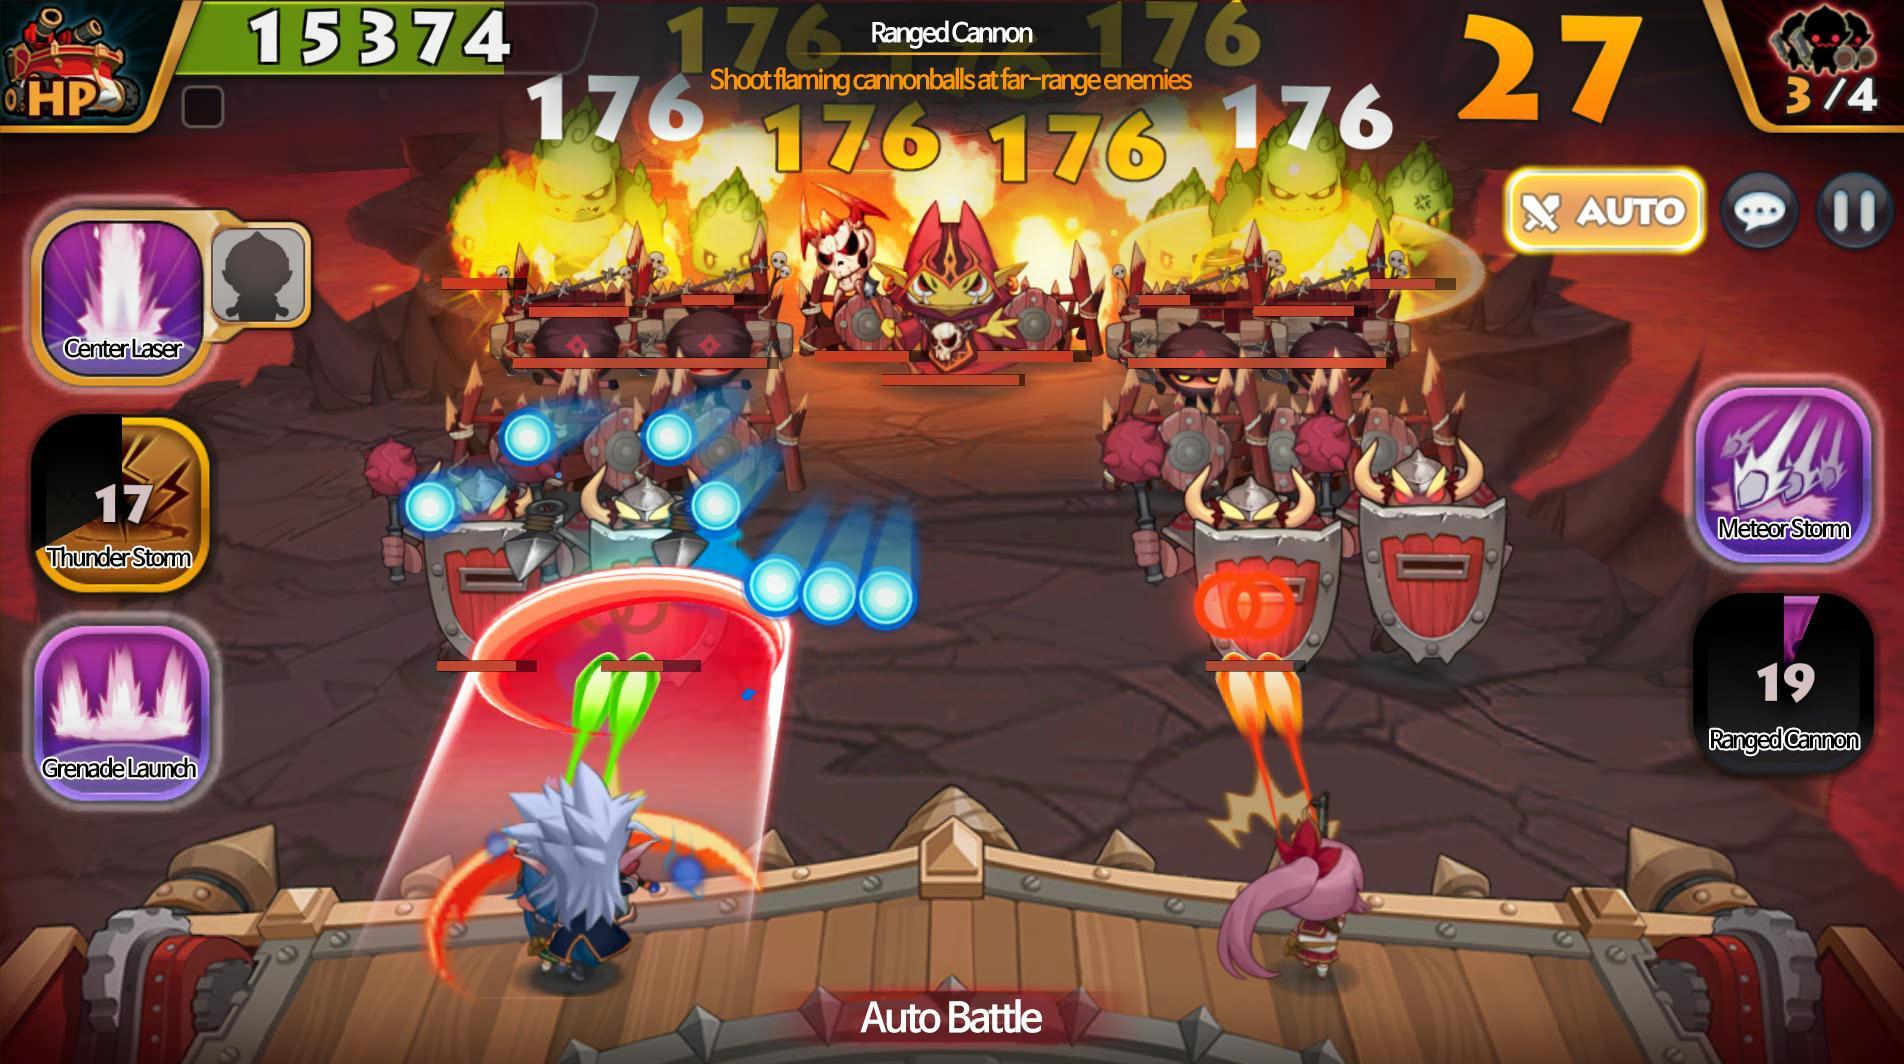 Screenshot of Monster Sweeperz